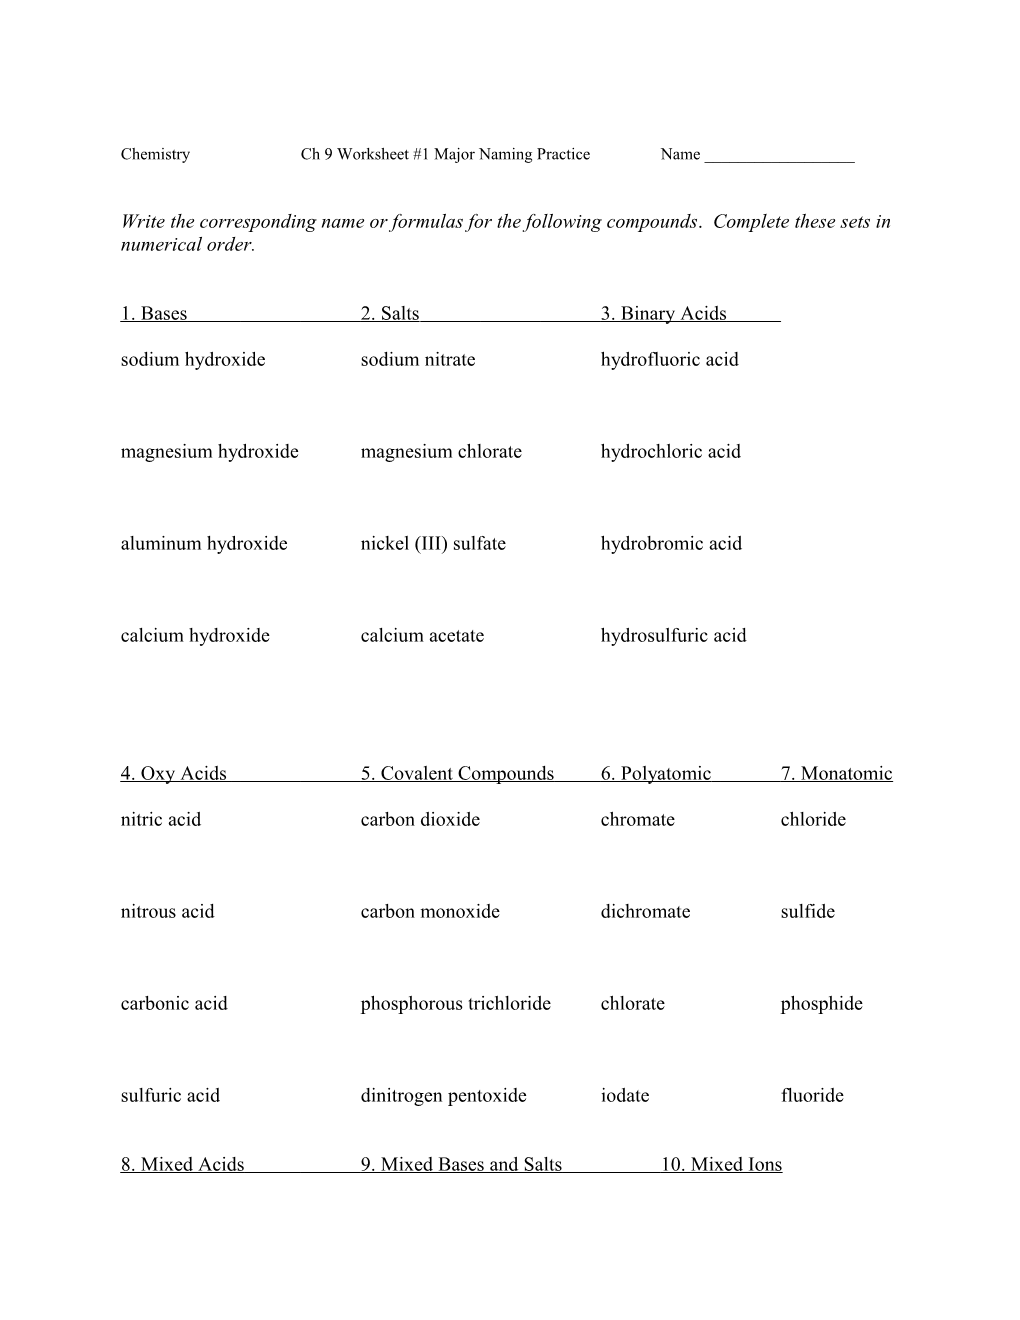 Chemistrych 9 Worksheet #1 Major Naming Practicename ______